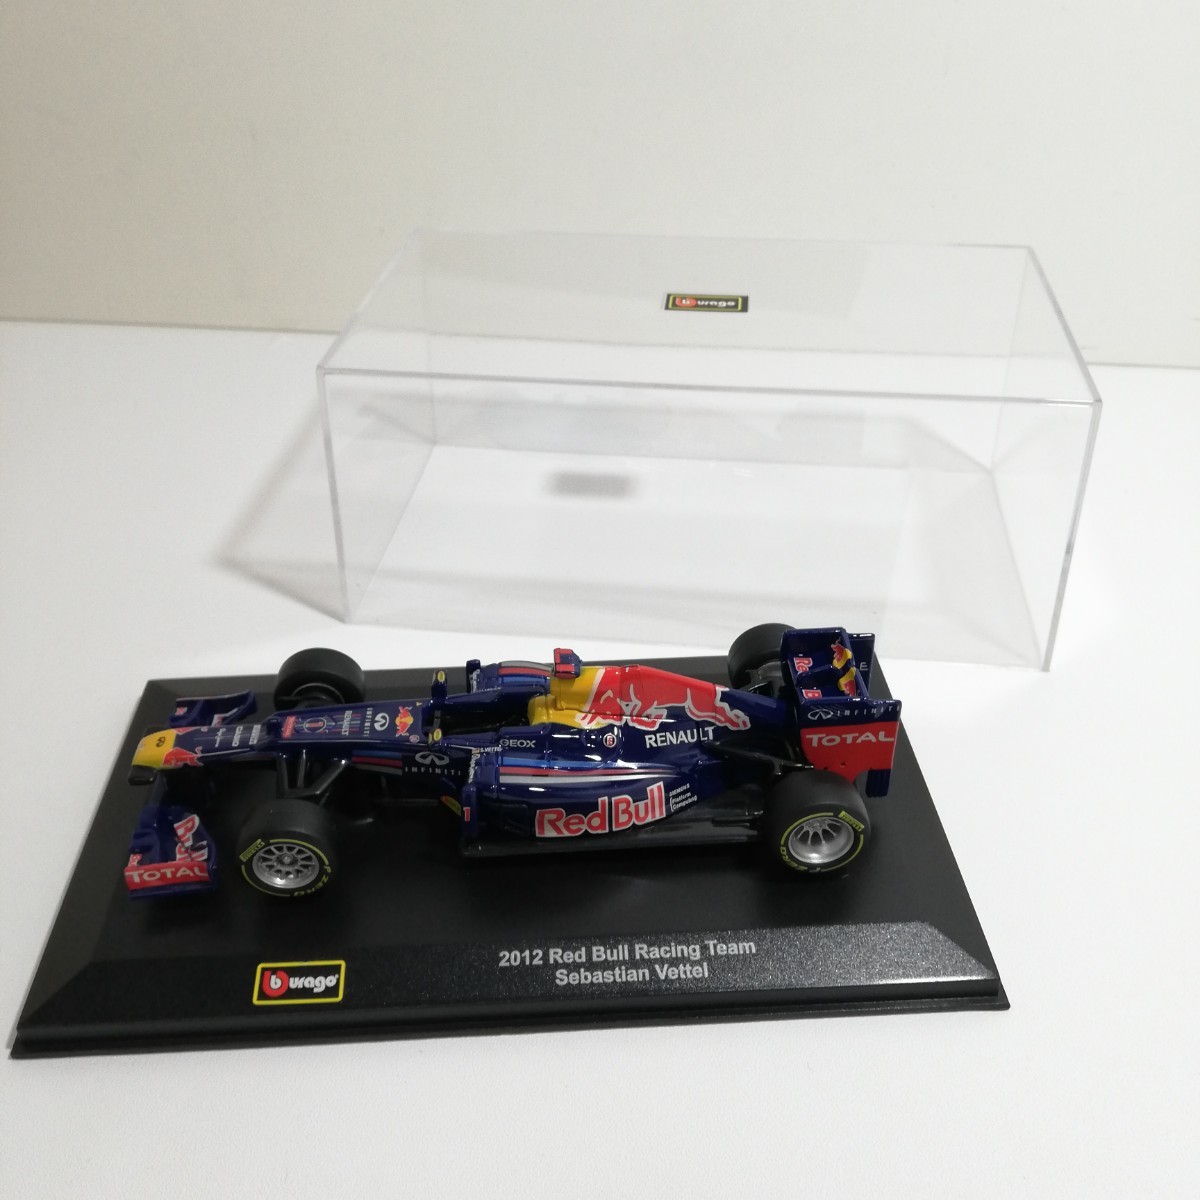 1/32 BBurago 2012 Red Bull * racing team F1 die-cast minicar model car se bus tea n*beteru[Red Bull Renault ]